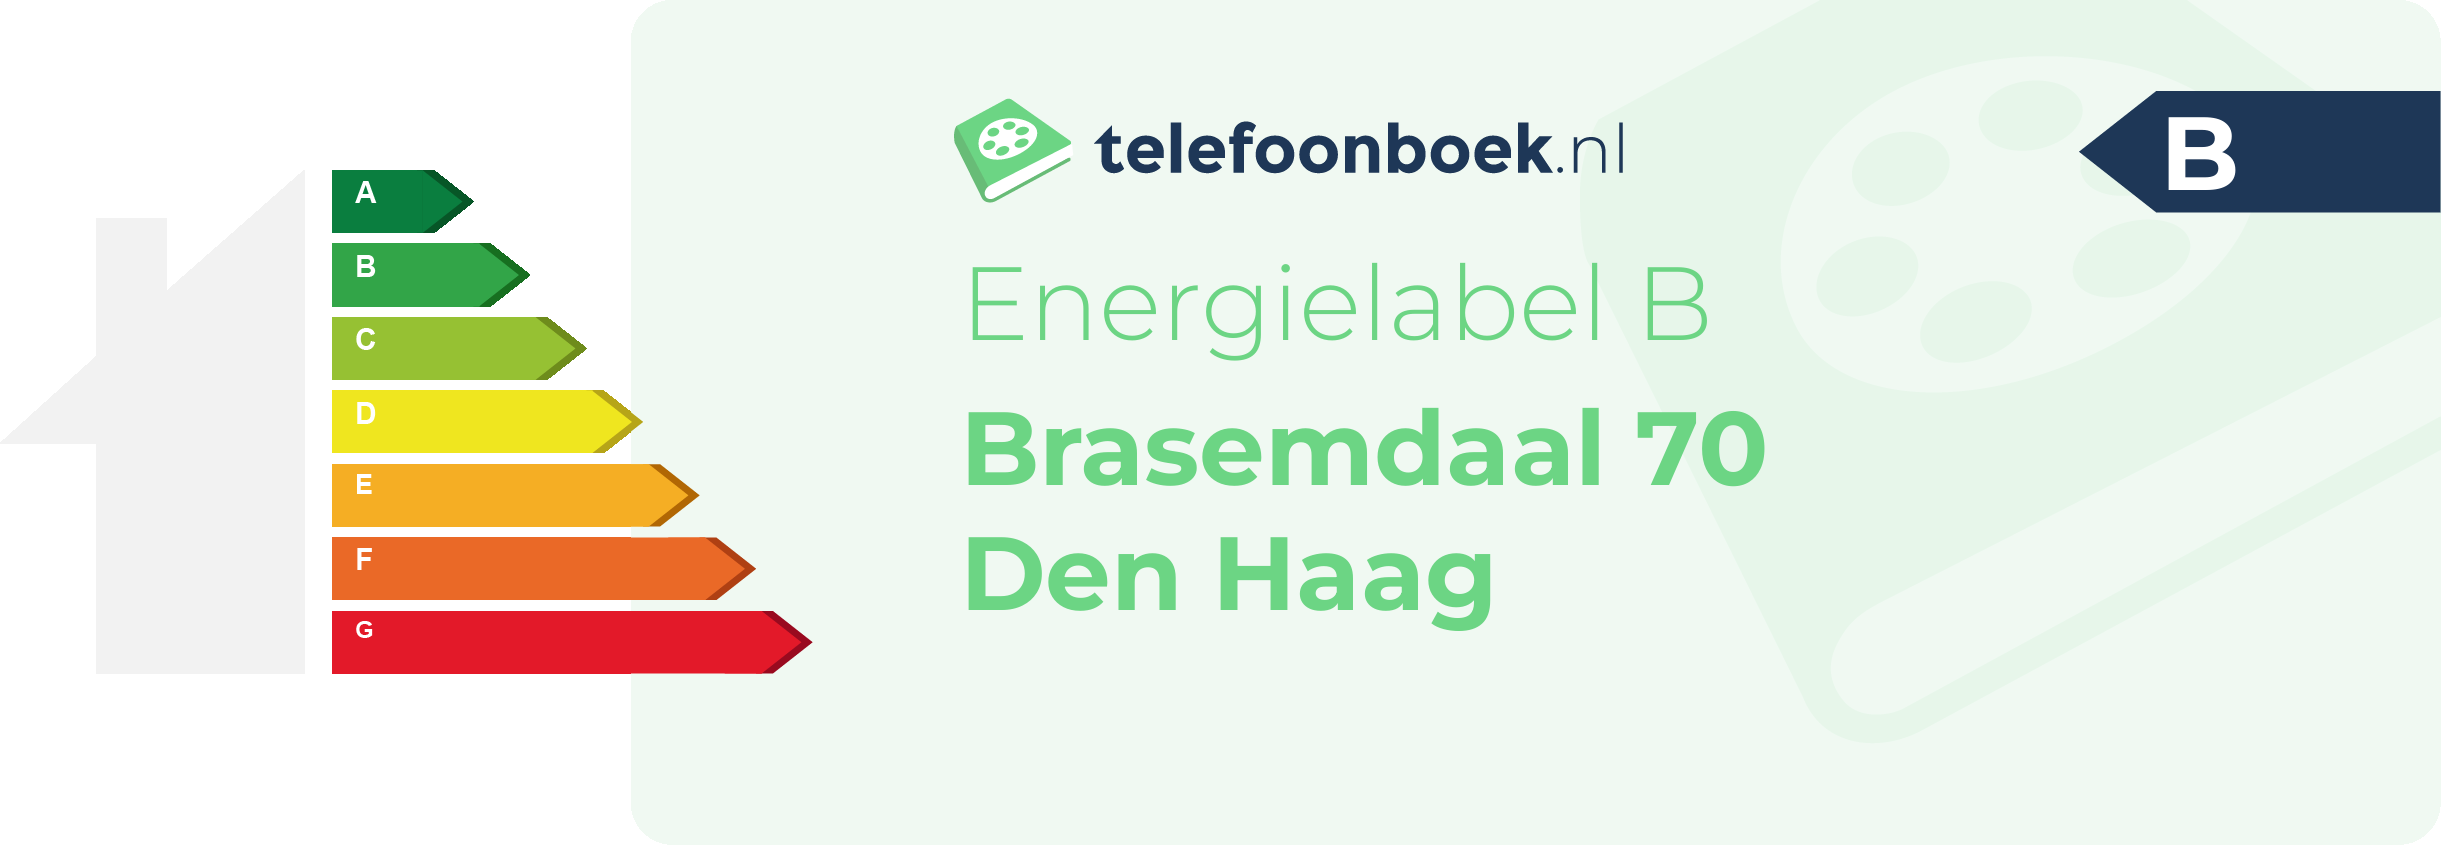 Energielabel Brasemdaal 70 Den Haag